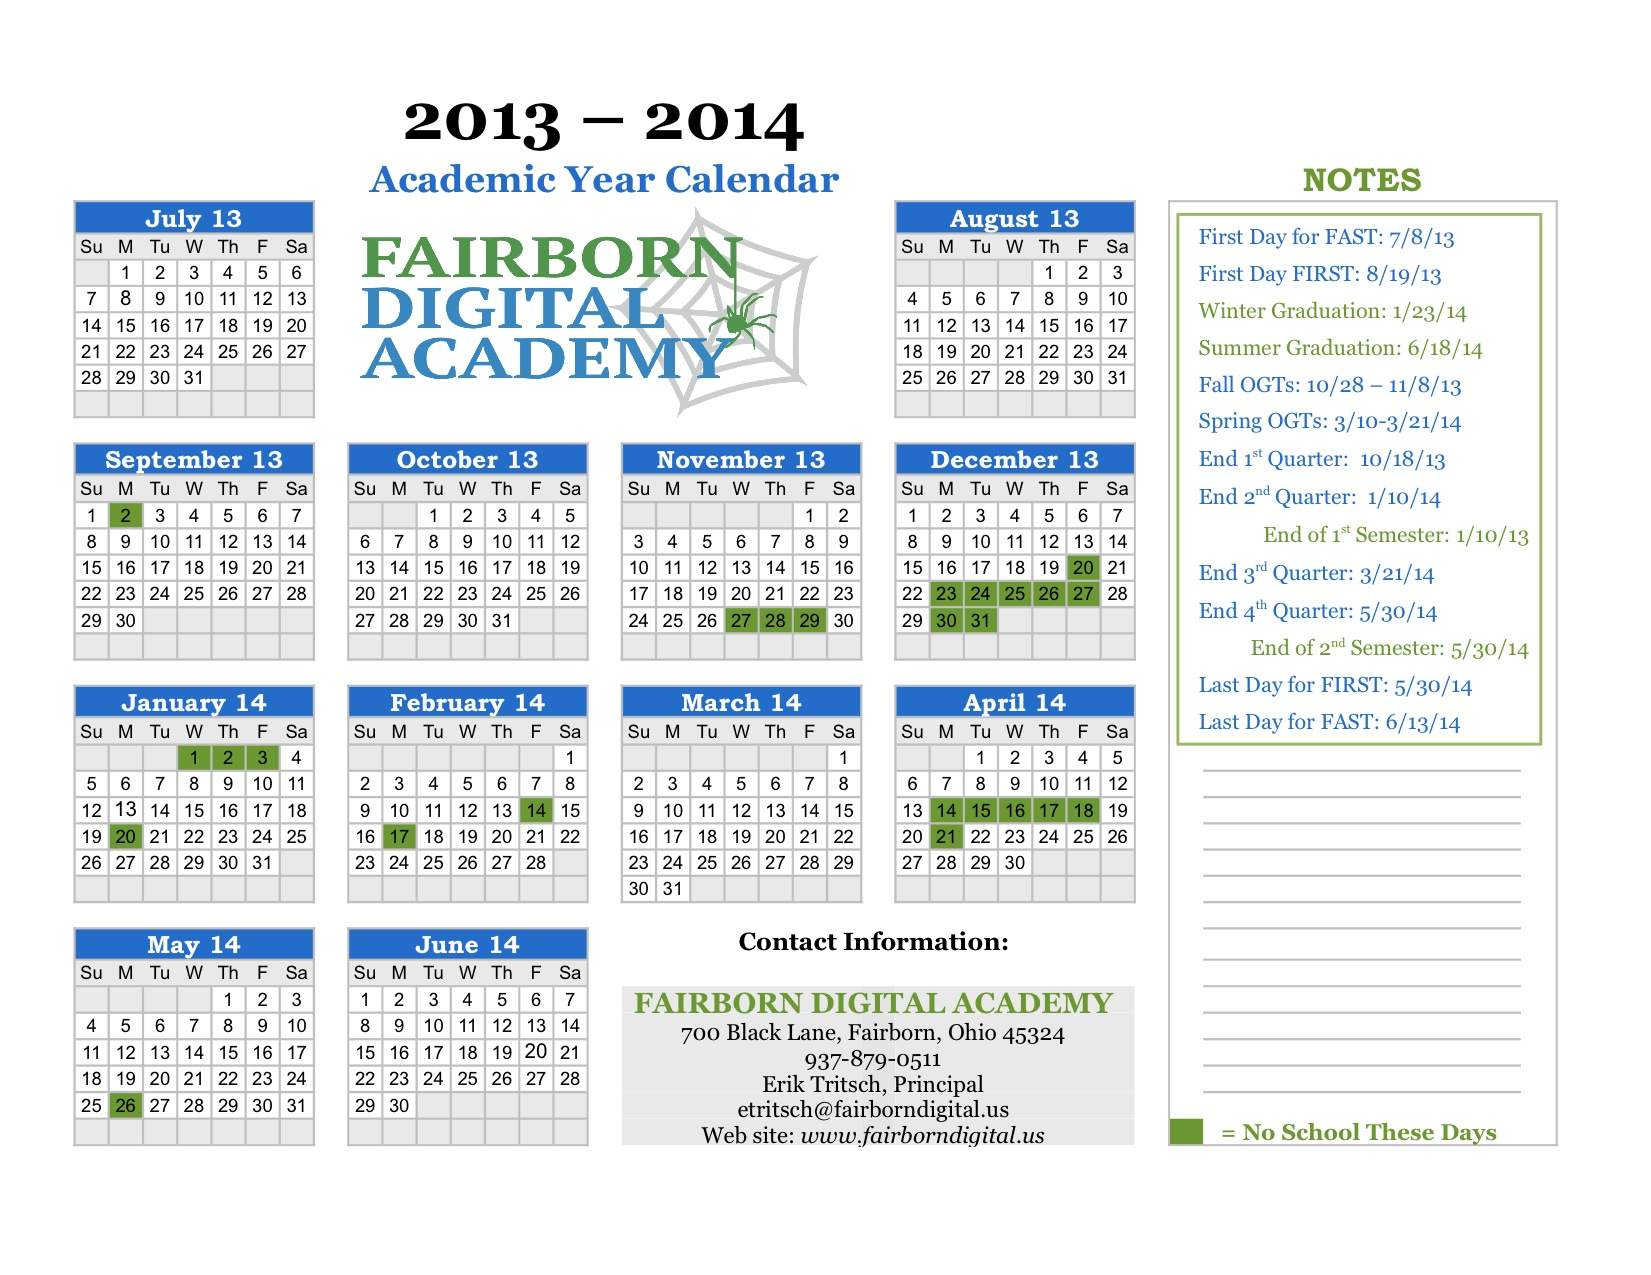 201314 FDA School Calendar Fairborn Digital Academy